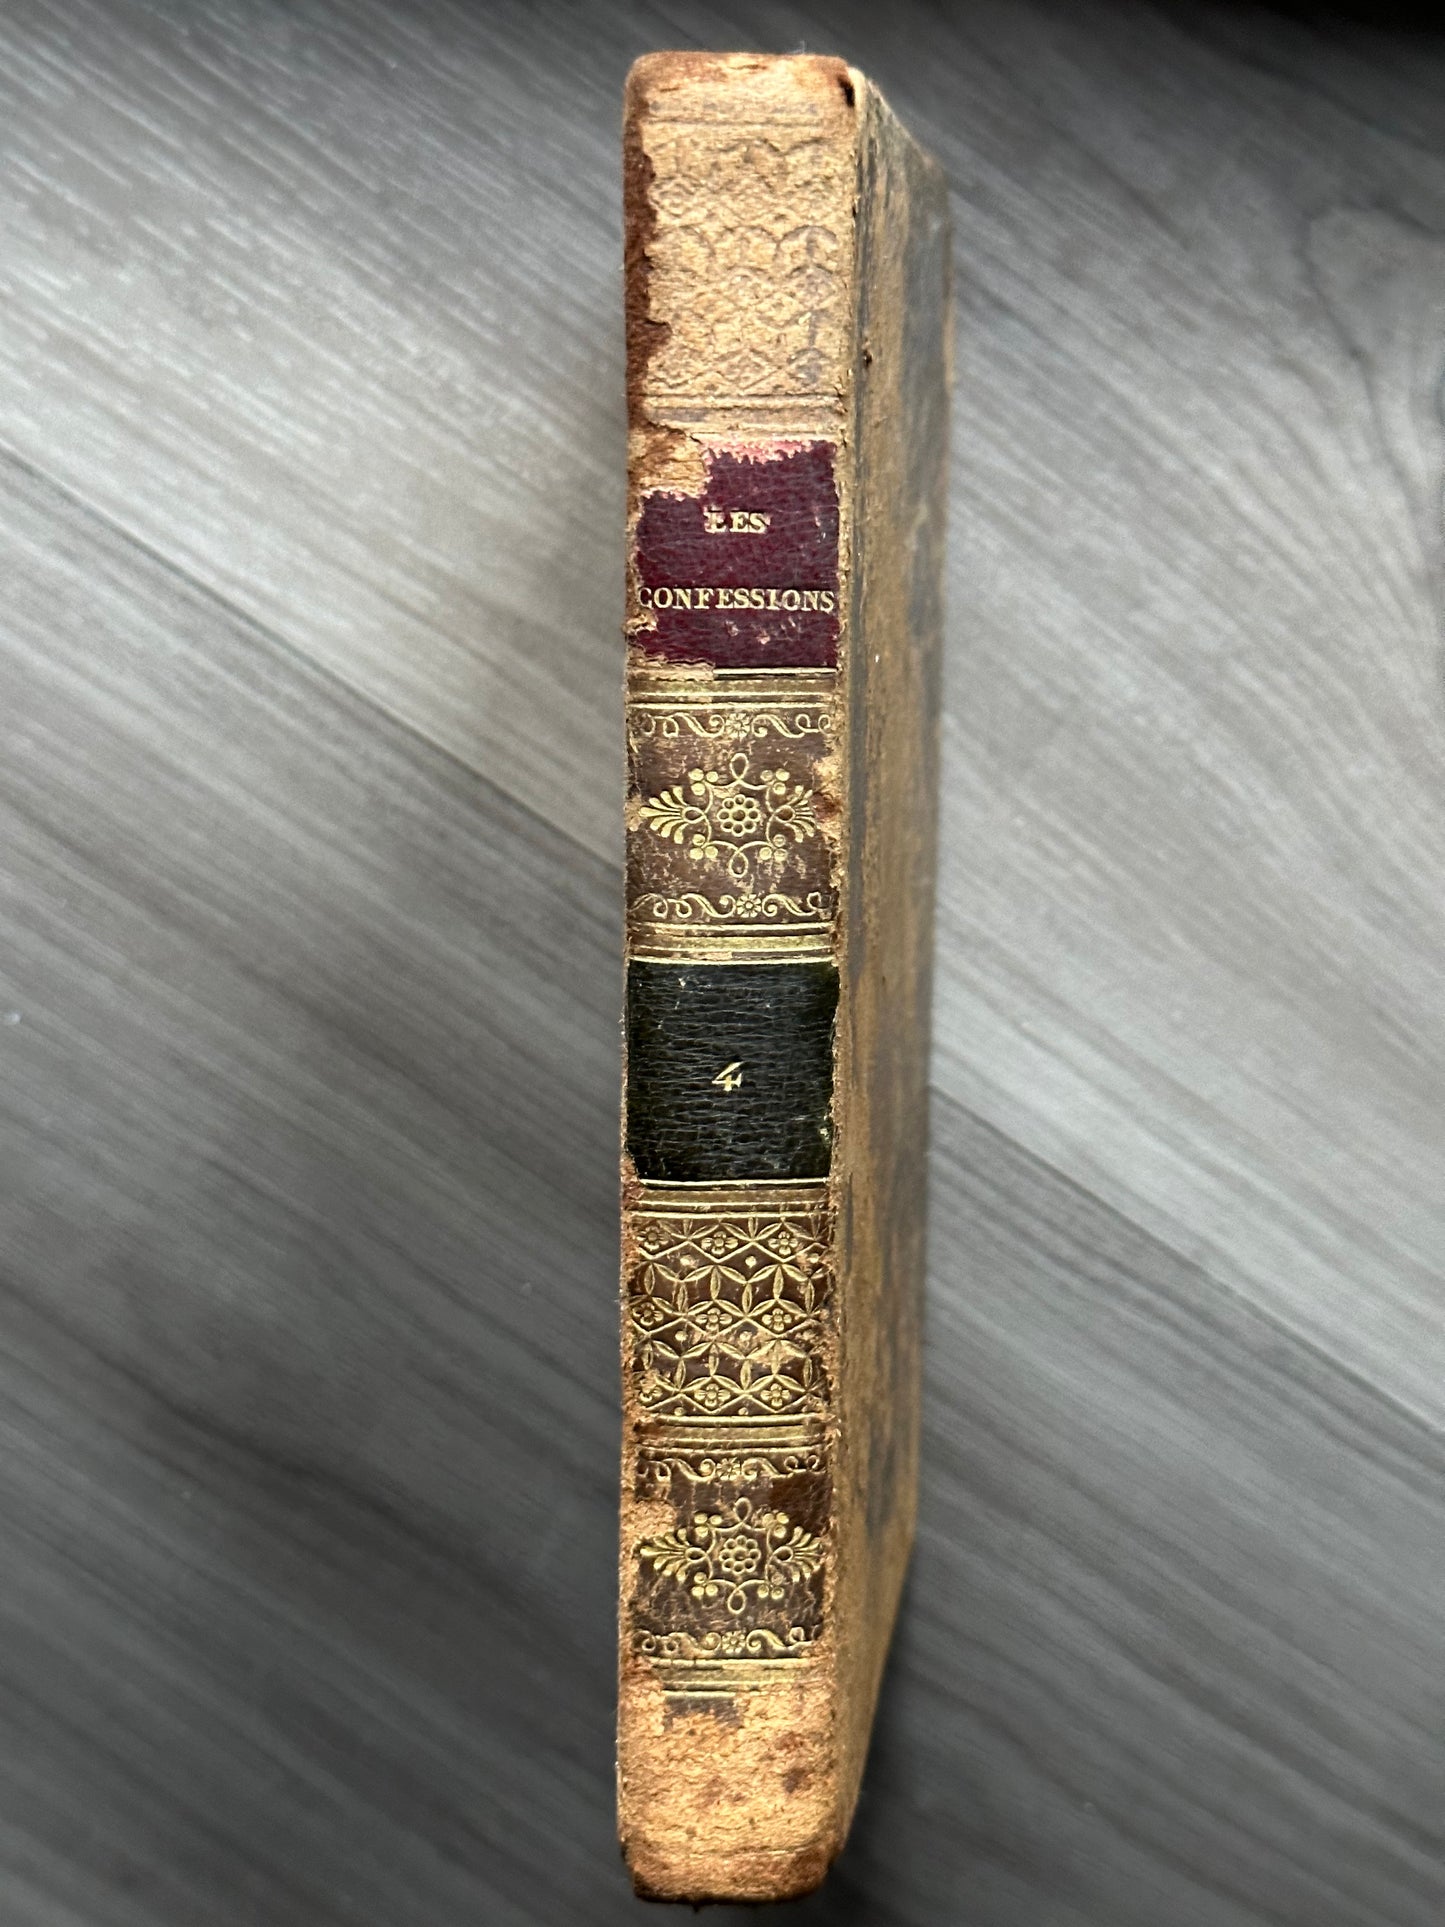 1824 Rousseau Book